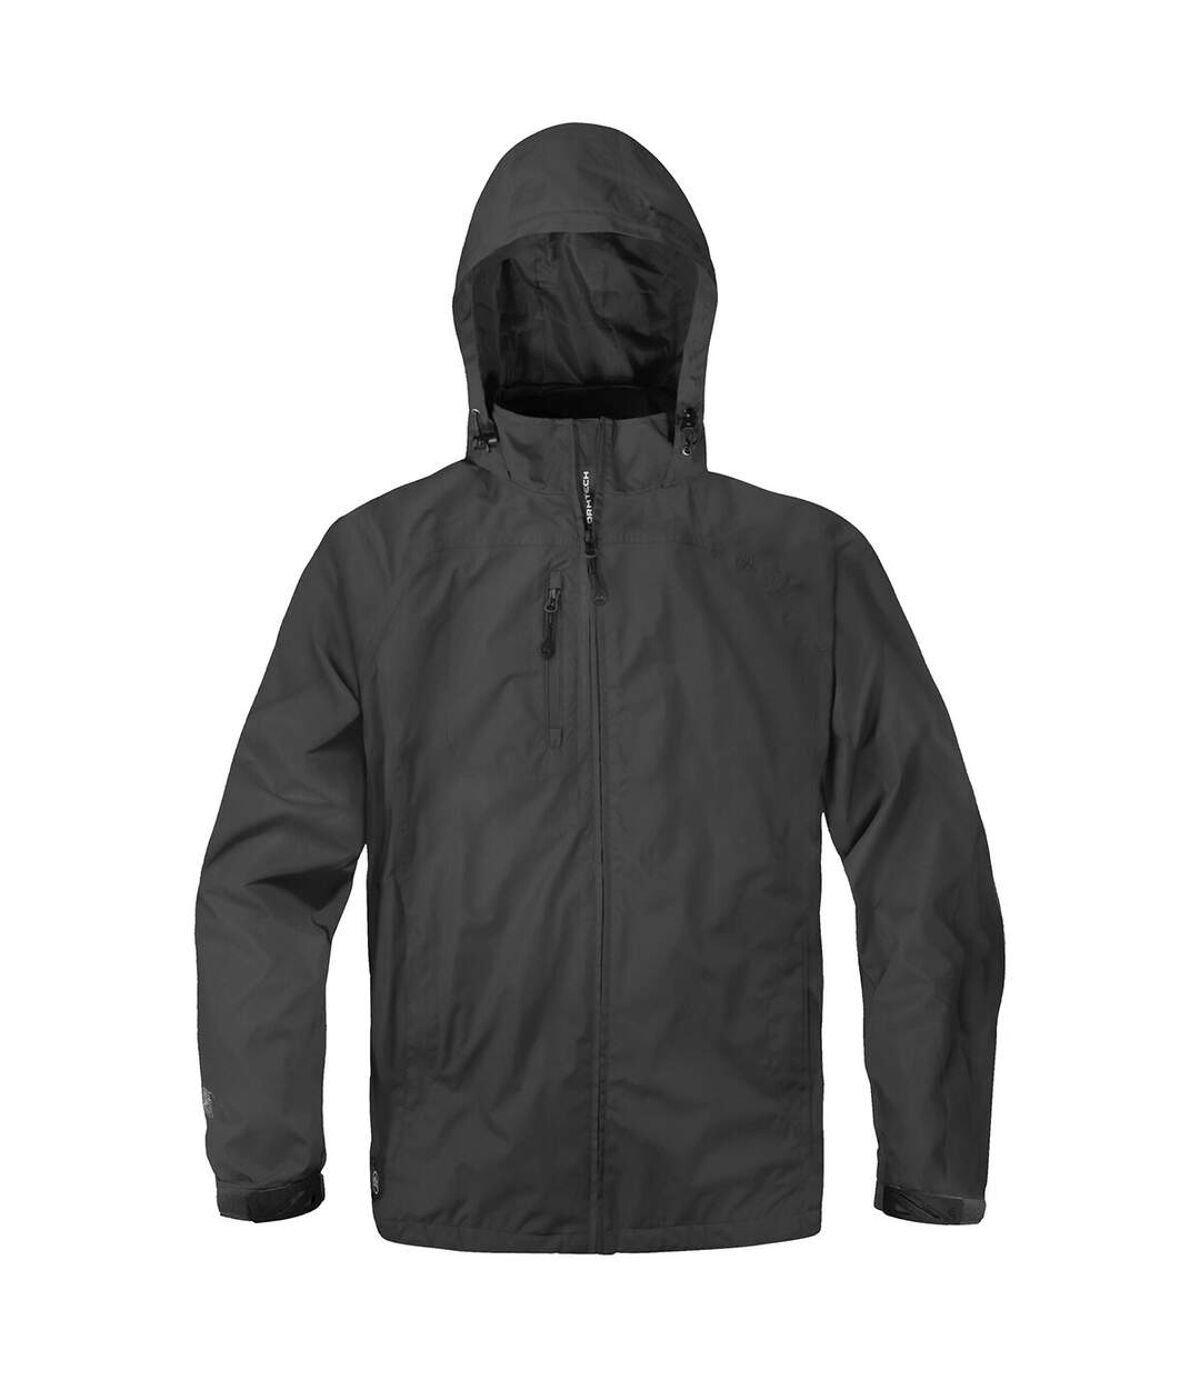 Stormtech Mens Stratus Light Shell Jacket (Waterproof & Breathable) (Black)